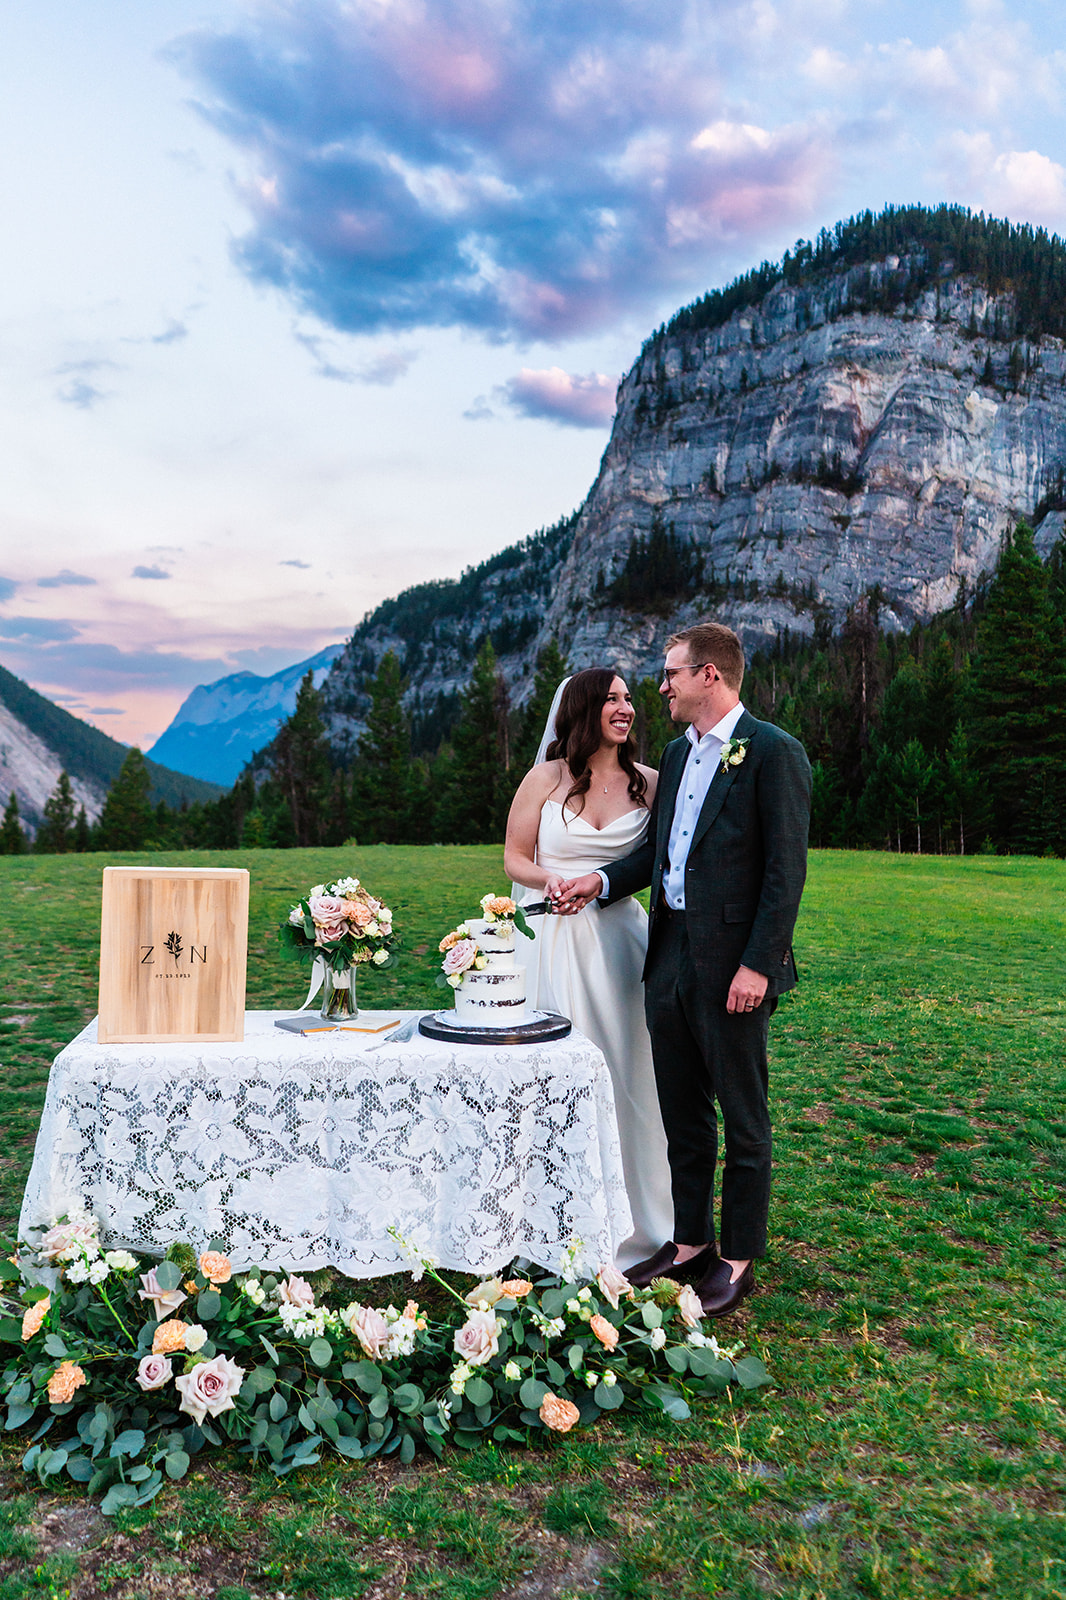 Bride and groom cutting cake for their Banff Wedding